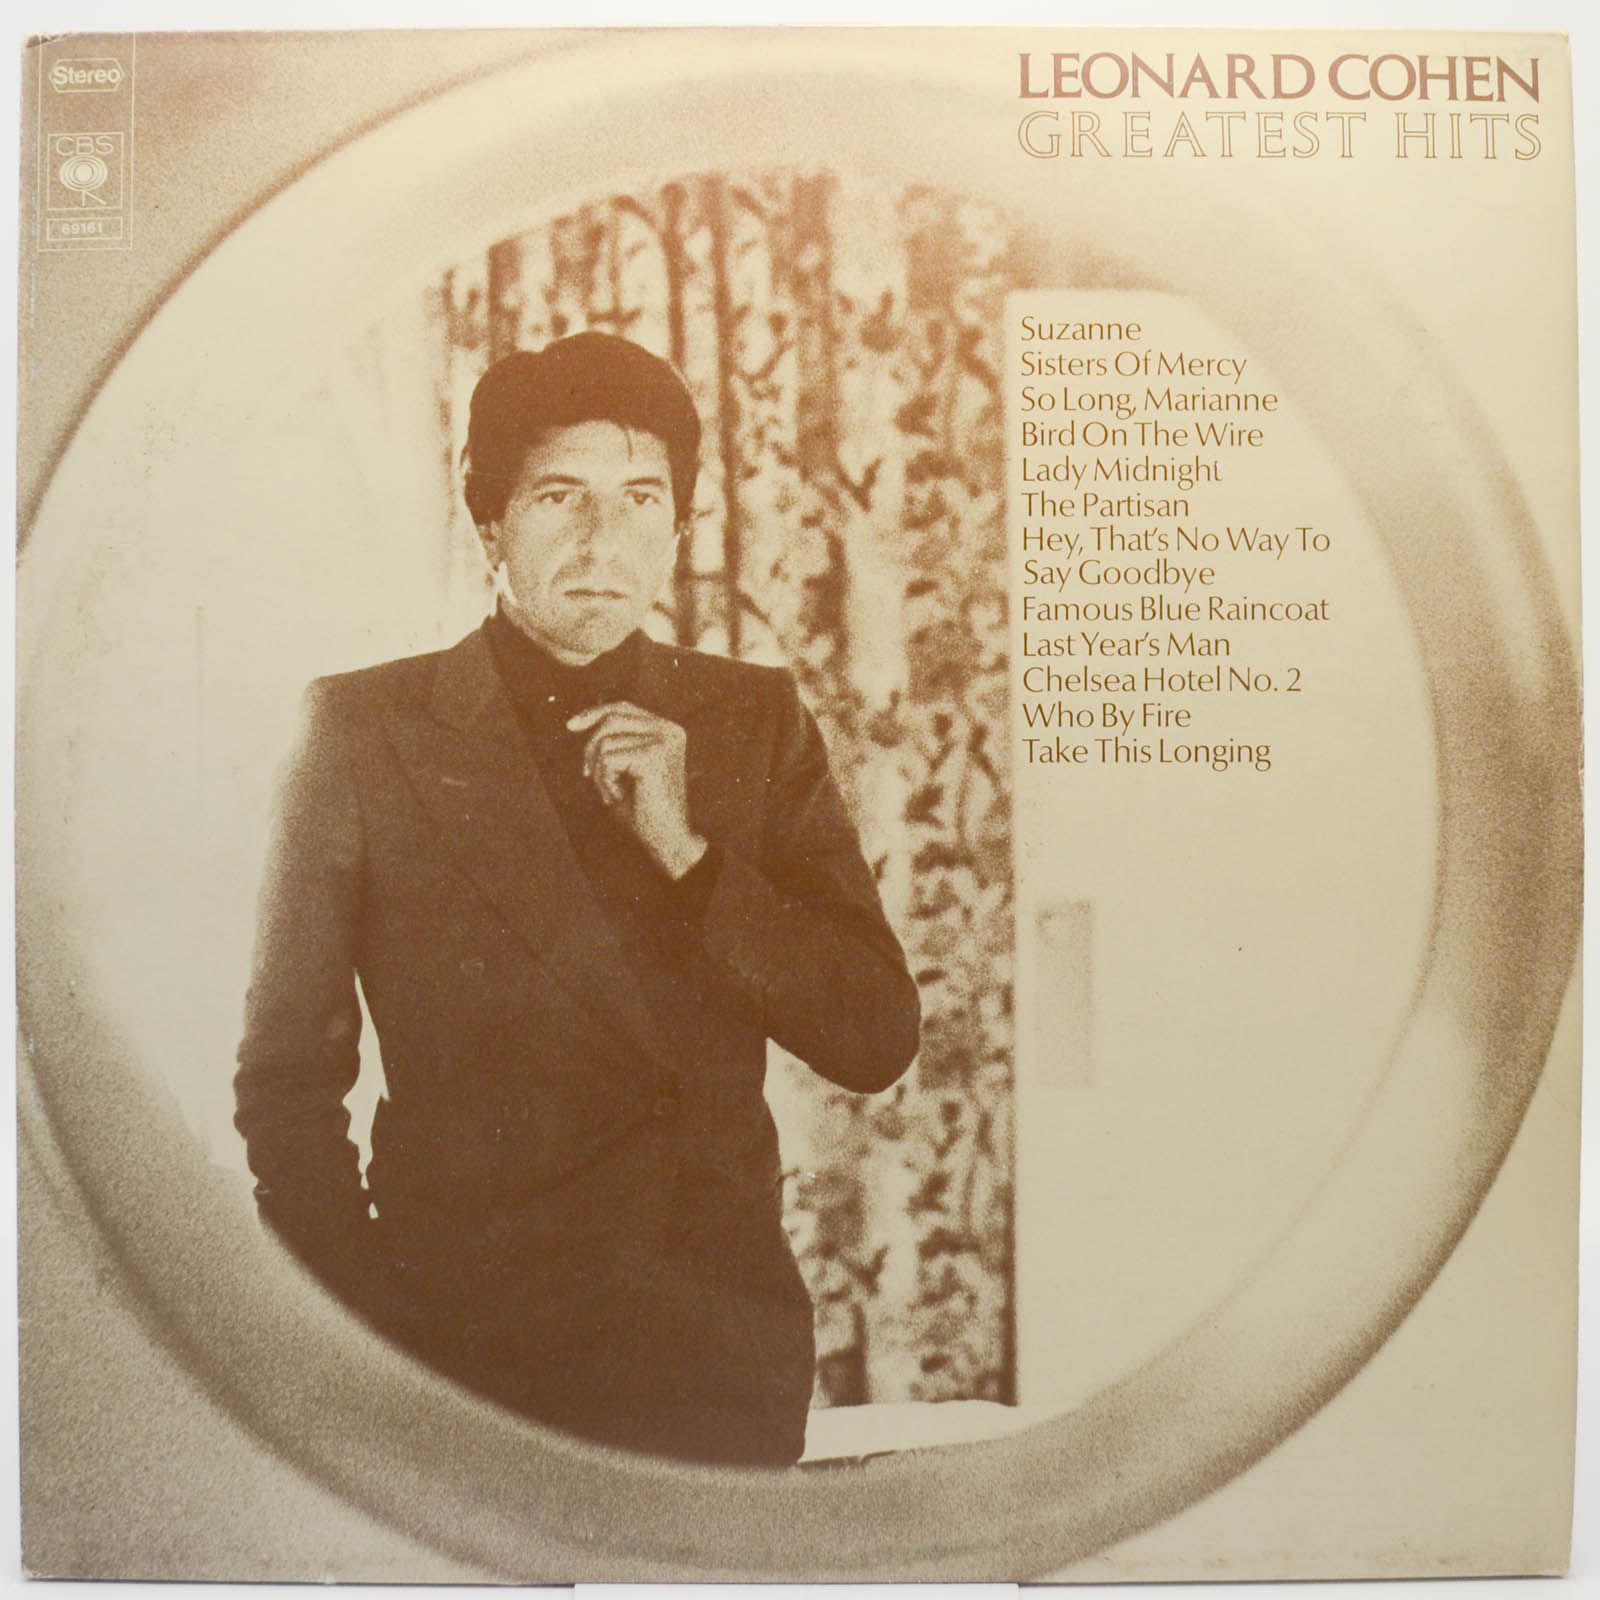 Leonard Cohen — Greatest Hits, 1975